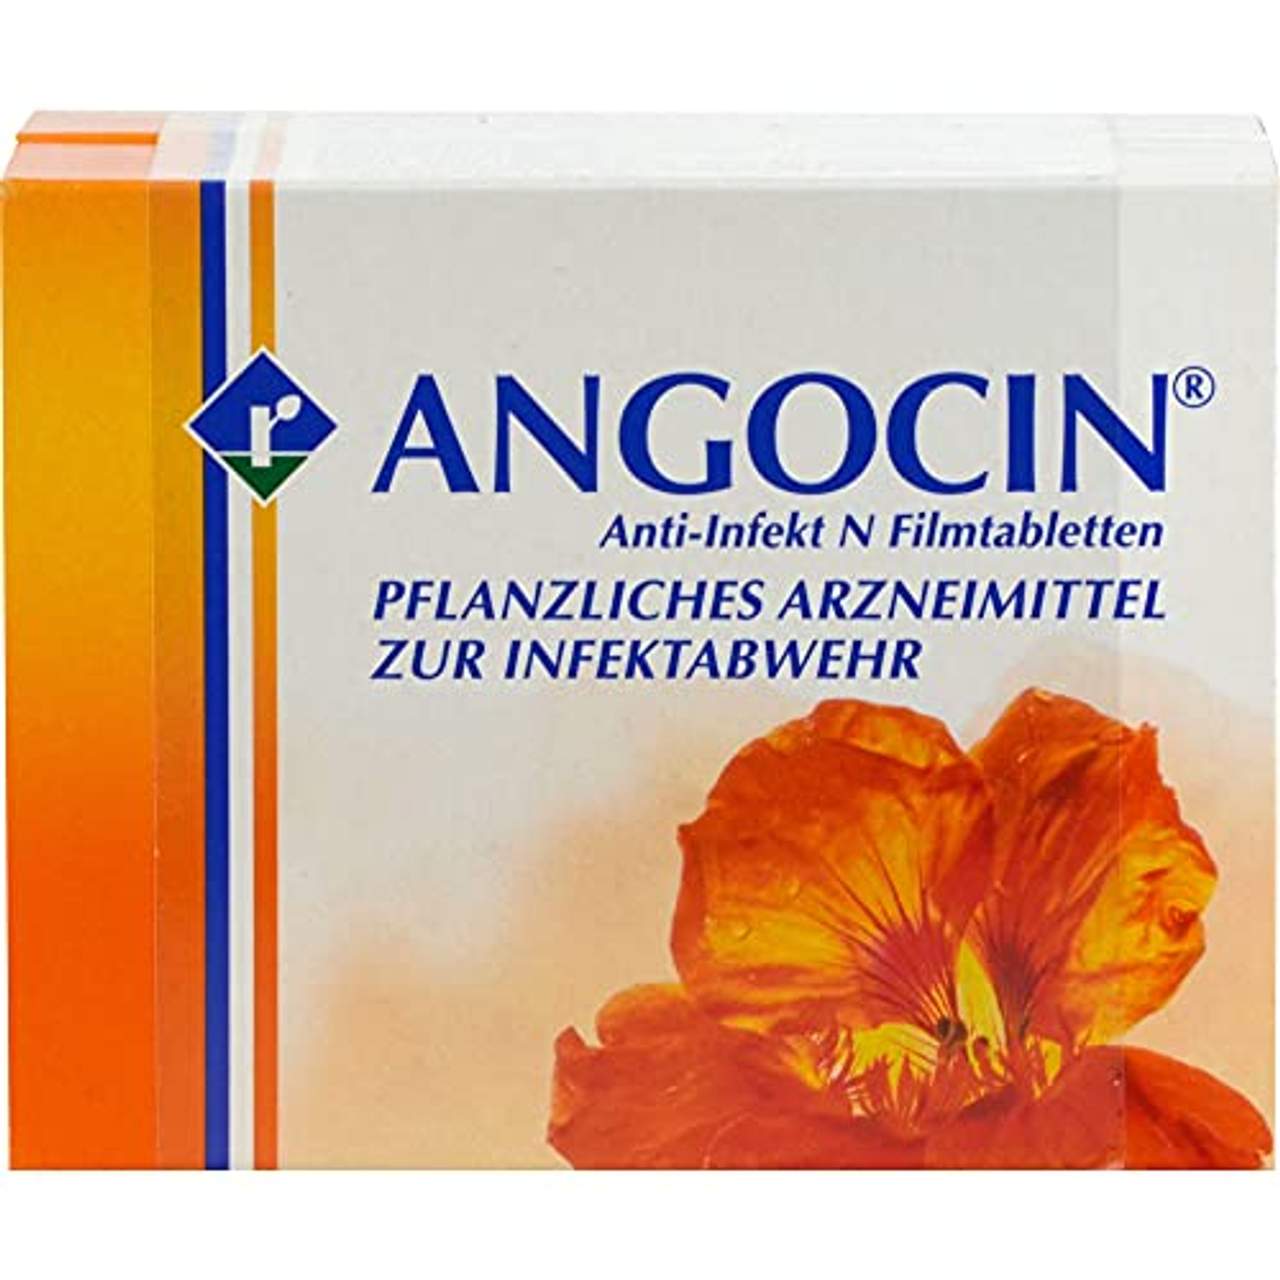 REPHA GmbH Biologische Arzneimittel Angocin Anti-Infekt N